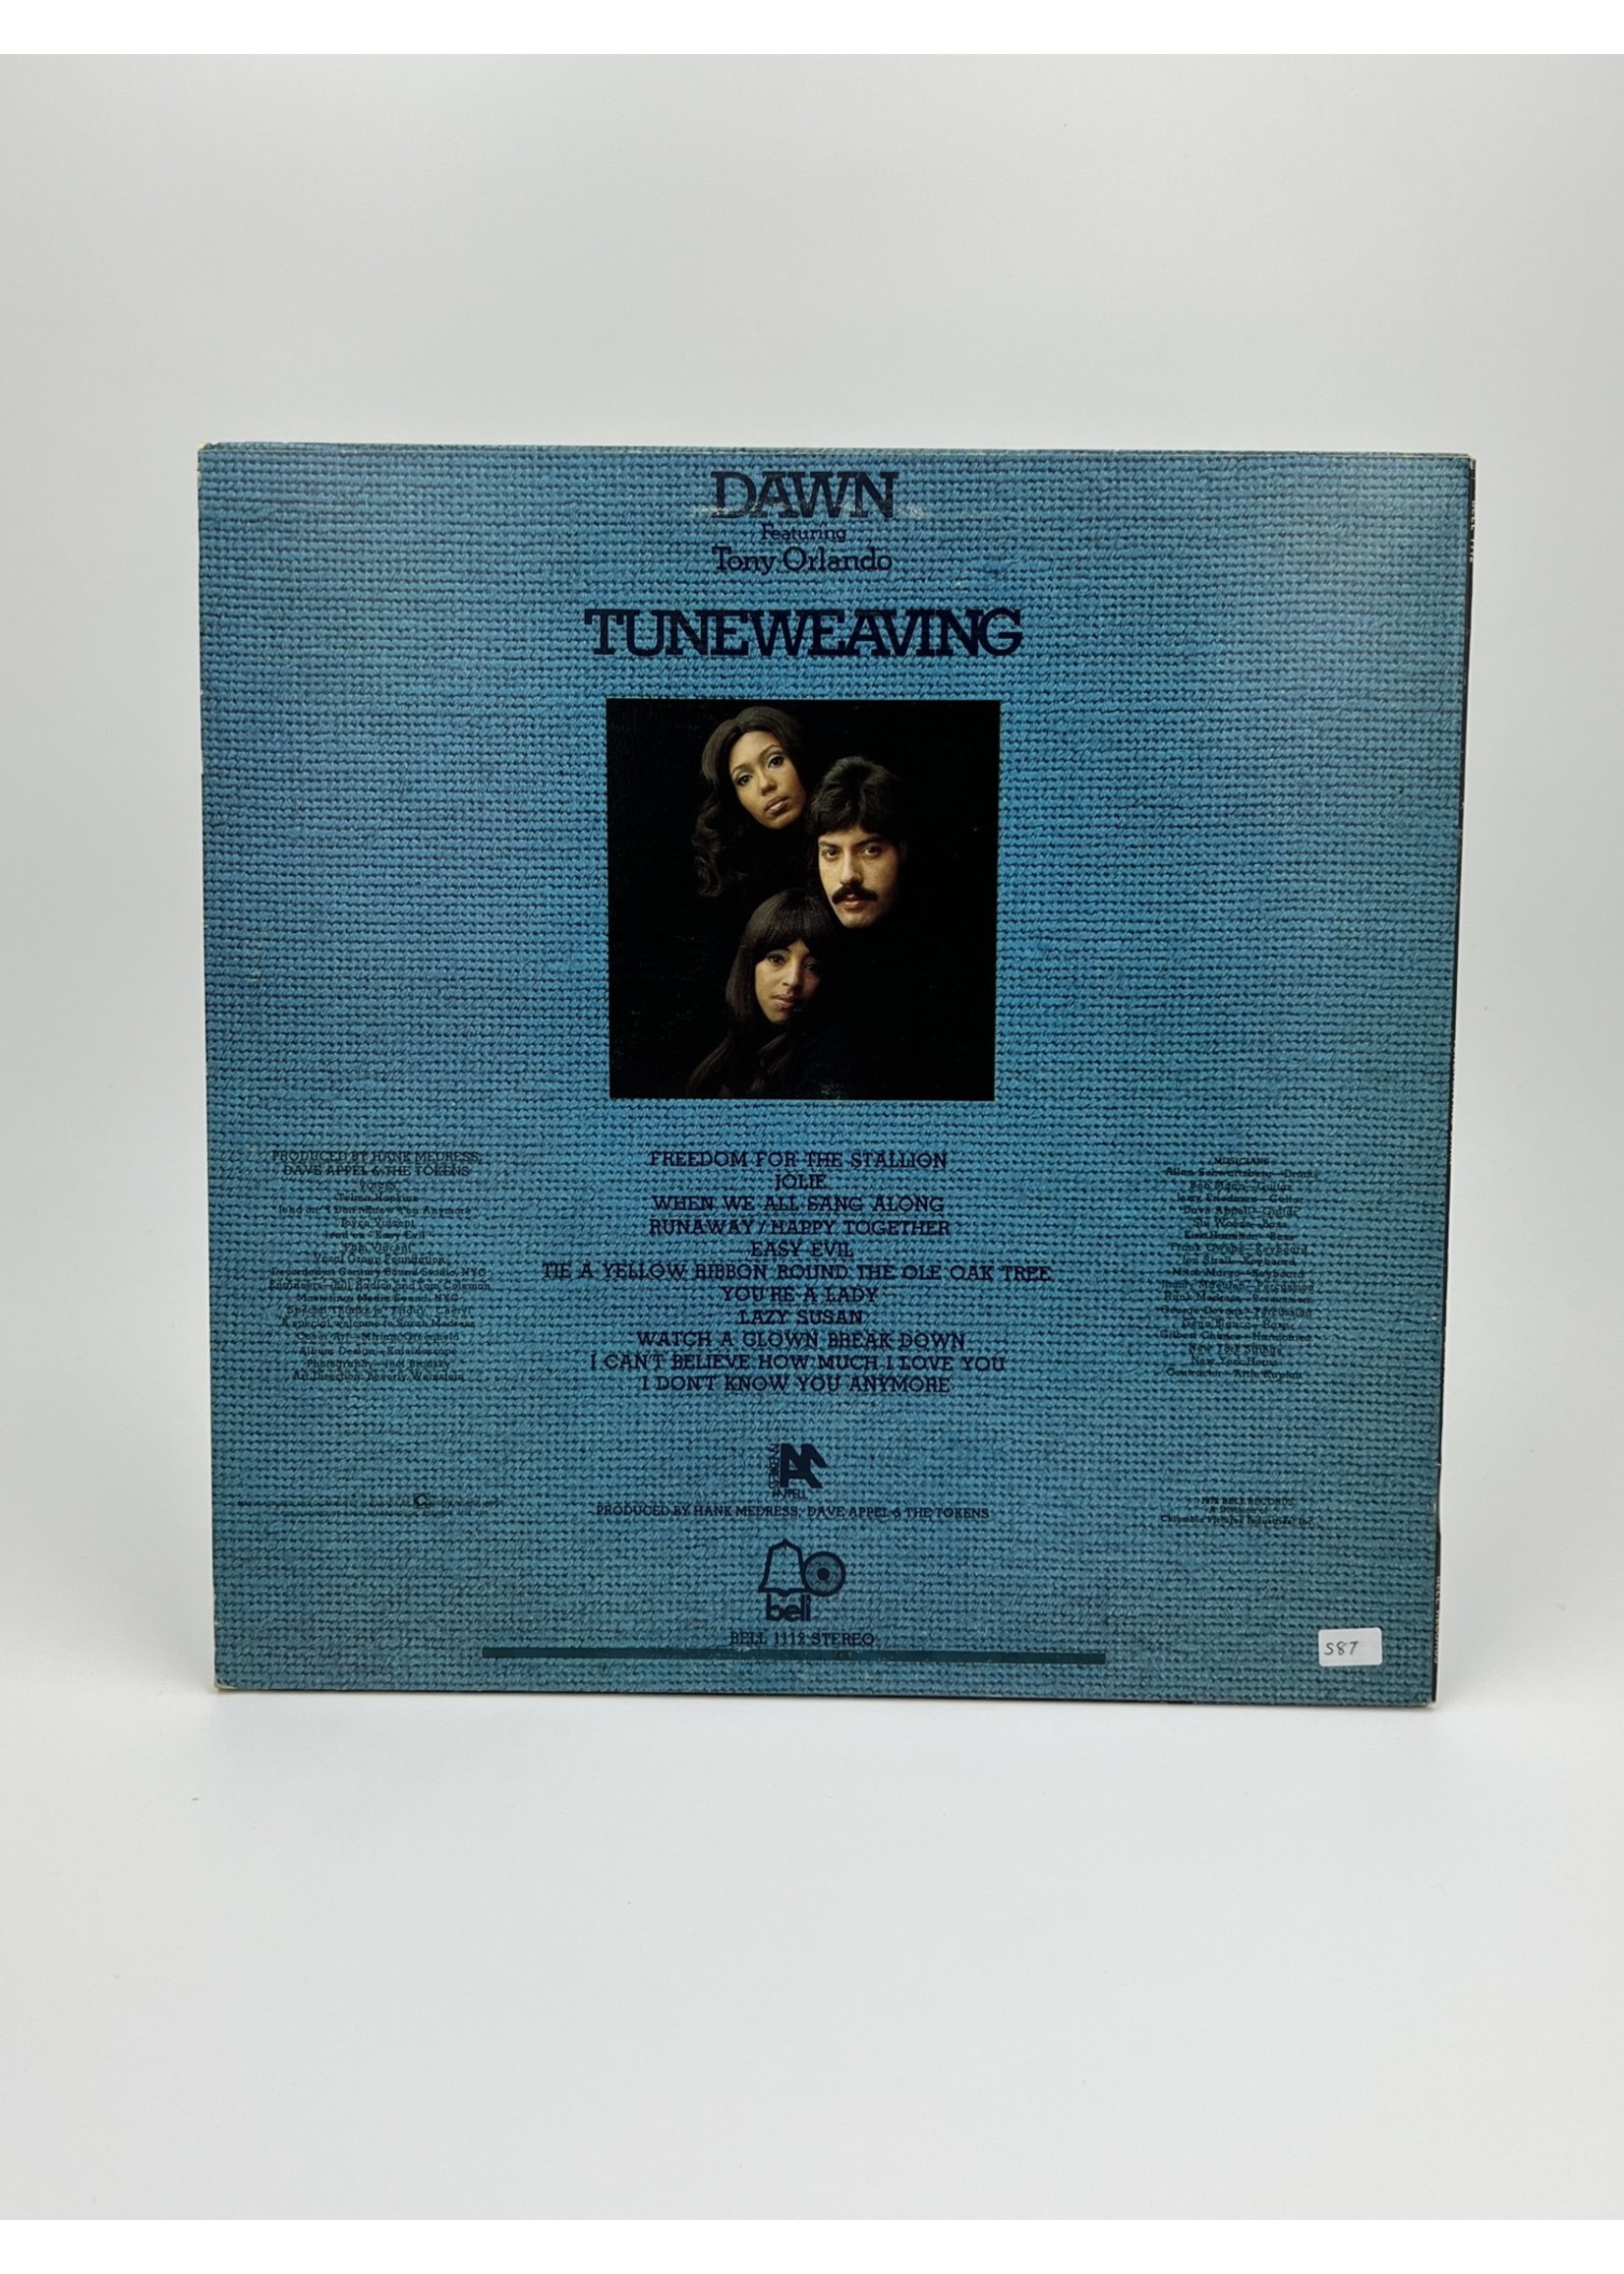 LP Dawn featuring Tony Orlando Tuneweaving LP Record